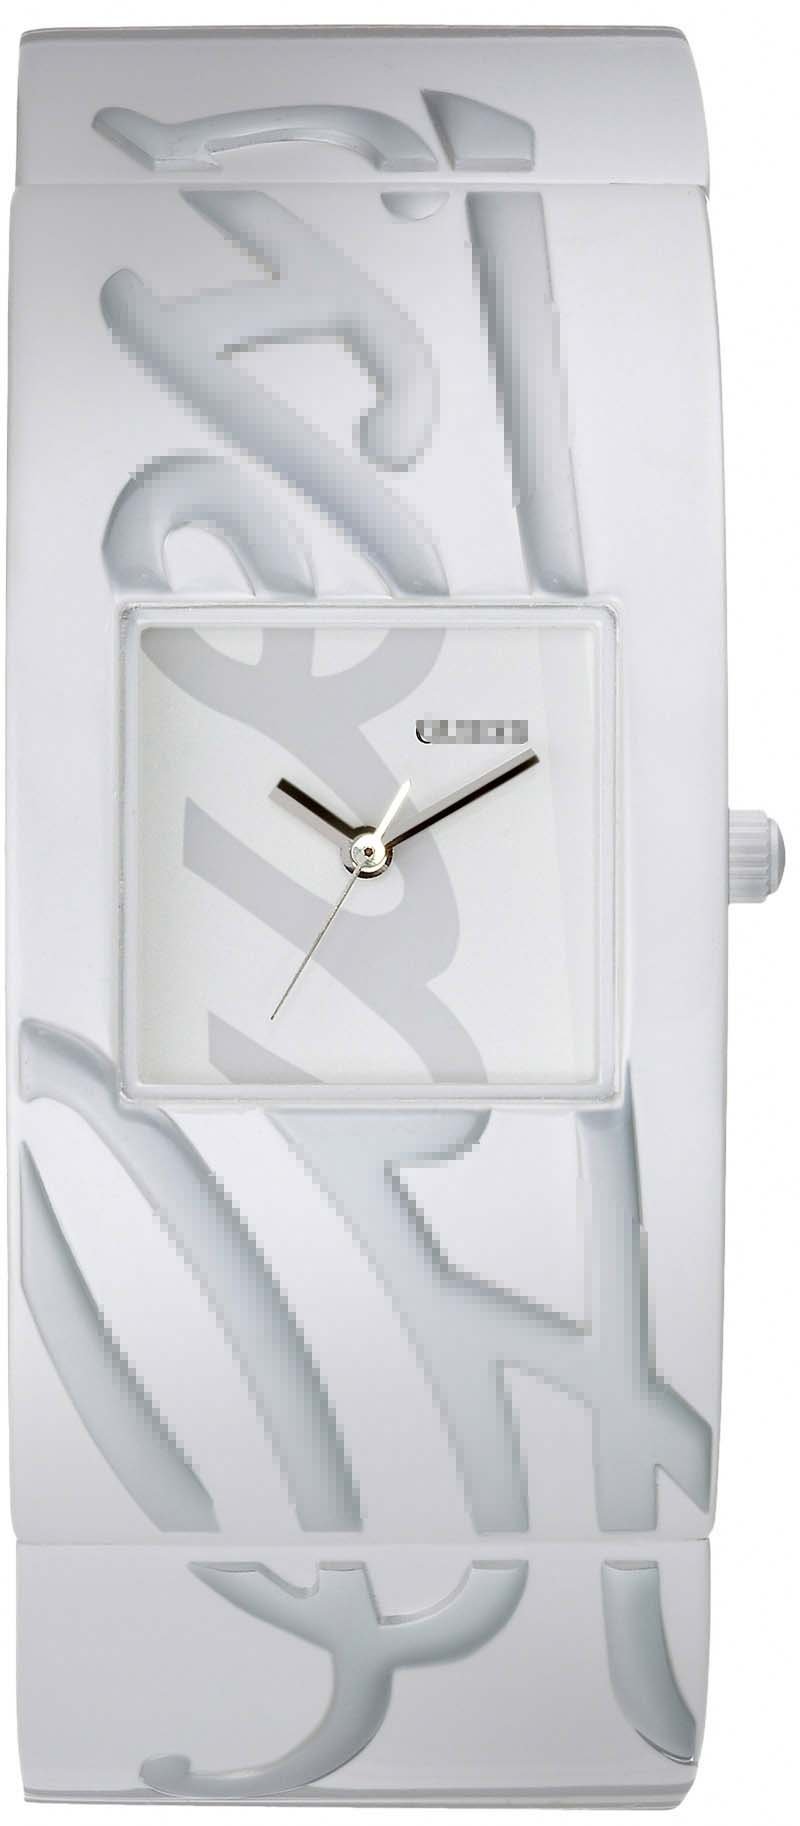 Customized Silver Watch Dial W12634L1